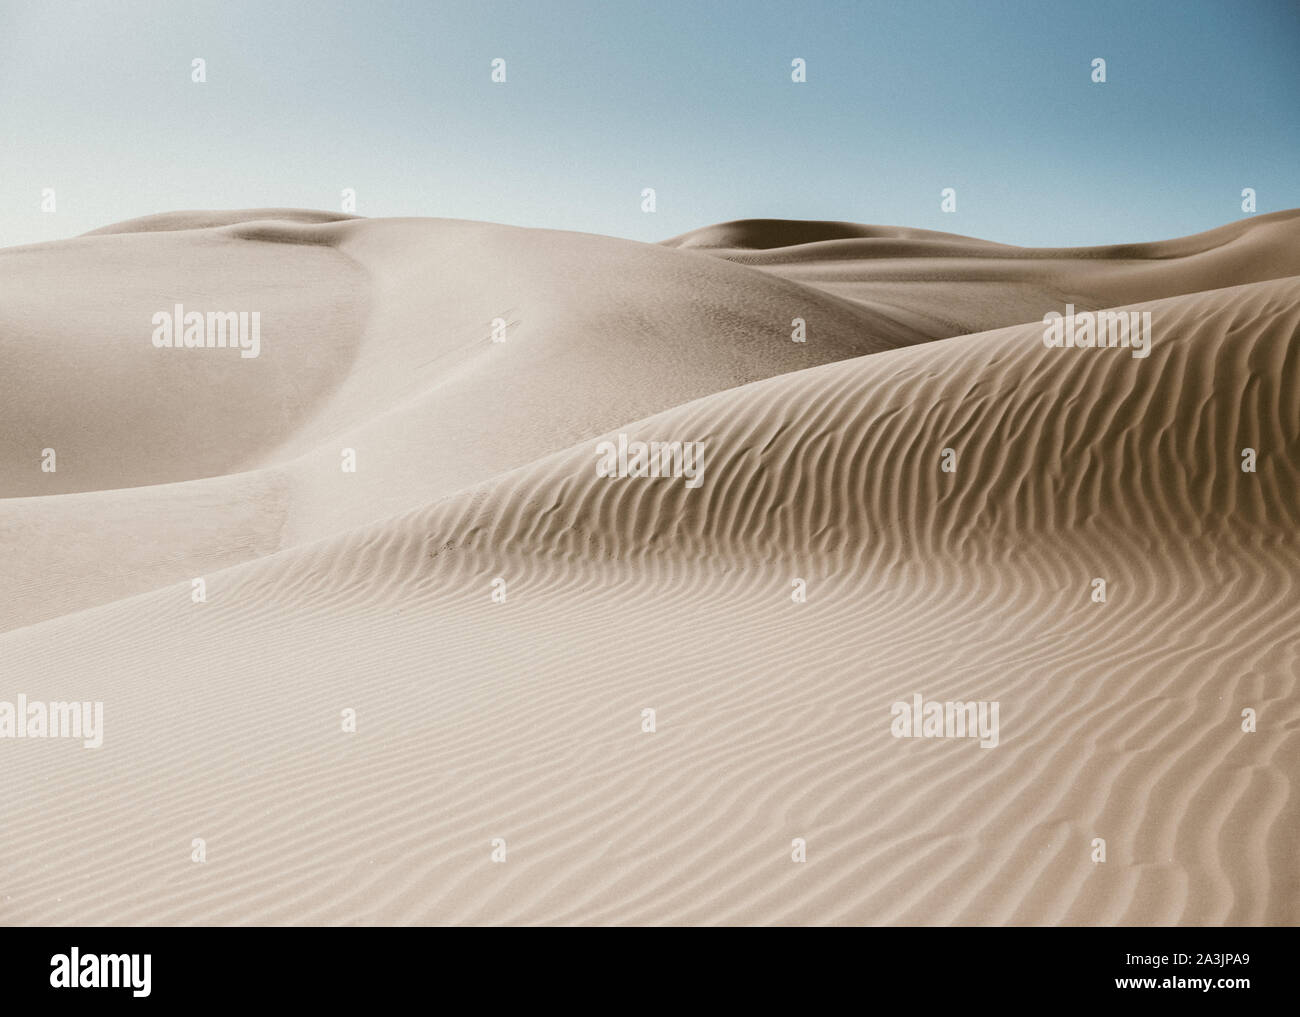 Imperial Sand Dunes: A larger-than-life adult sandbox